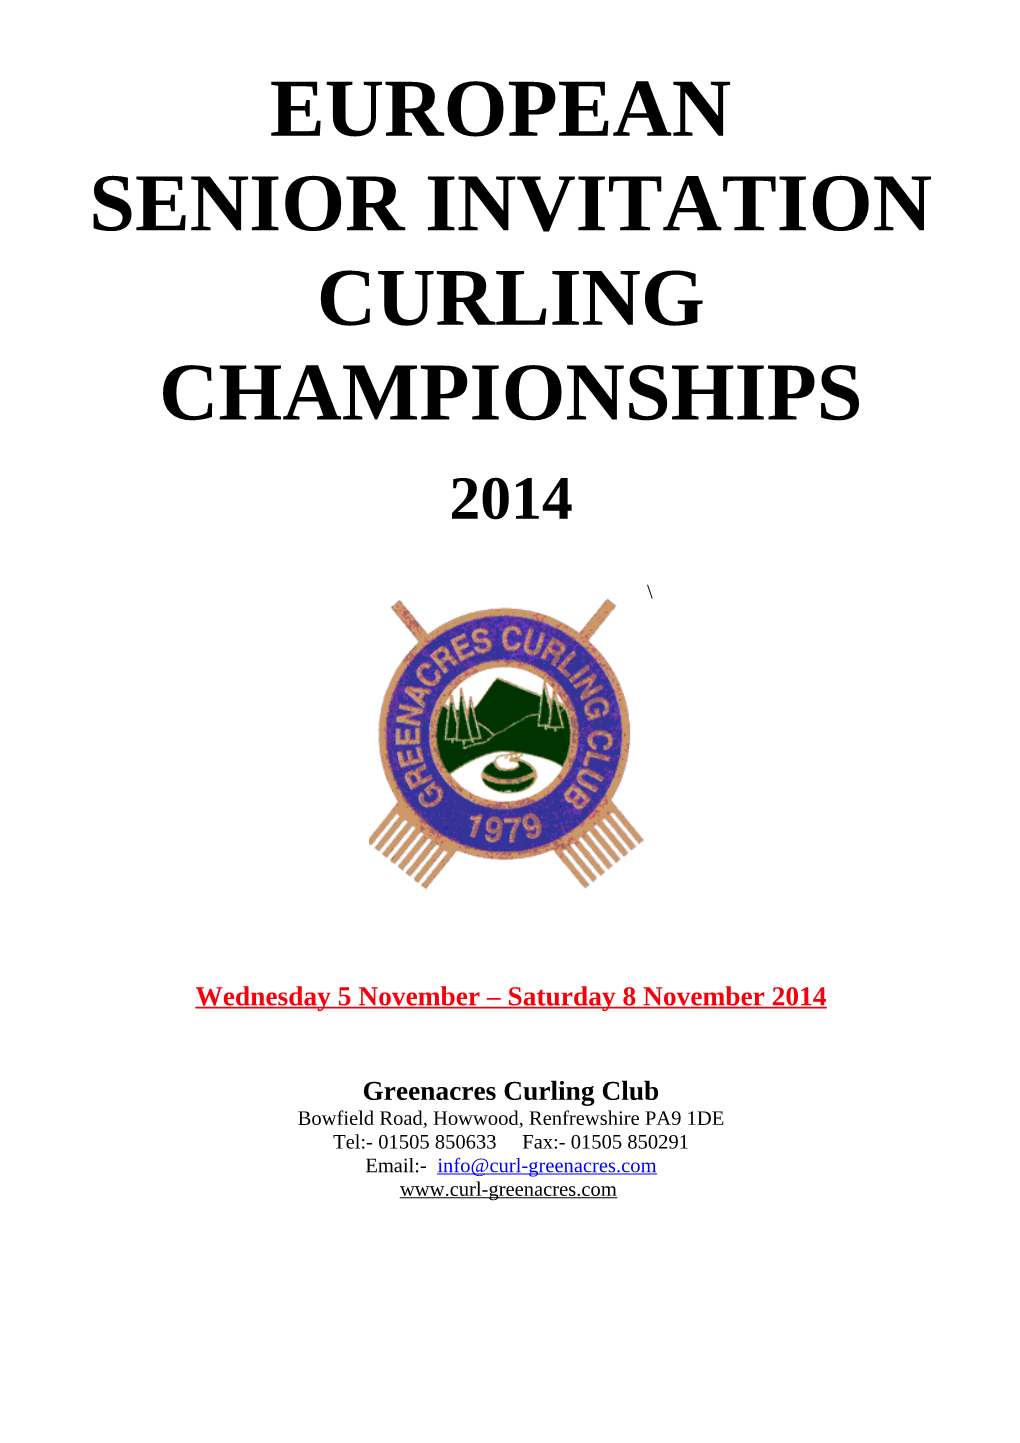 European Senior Invitation Curling Championships 2014